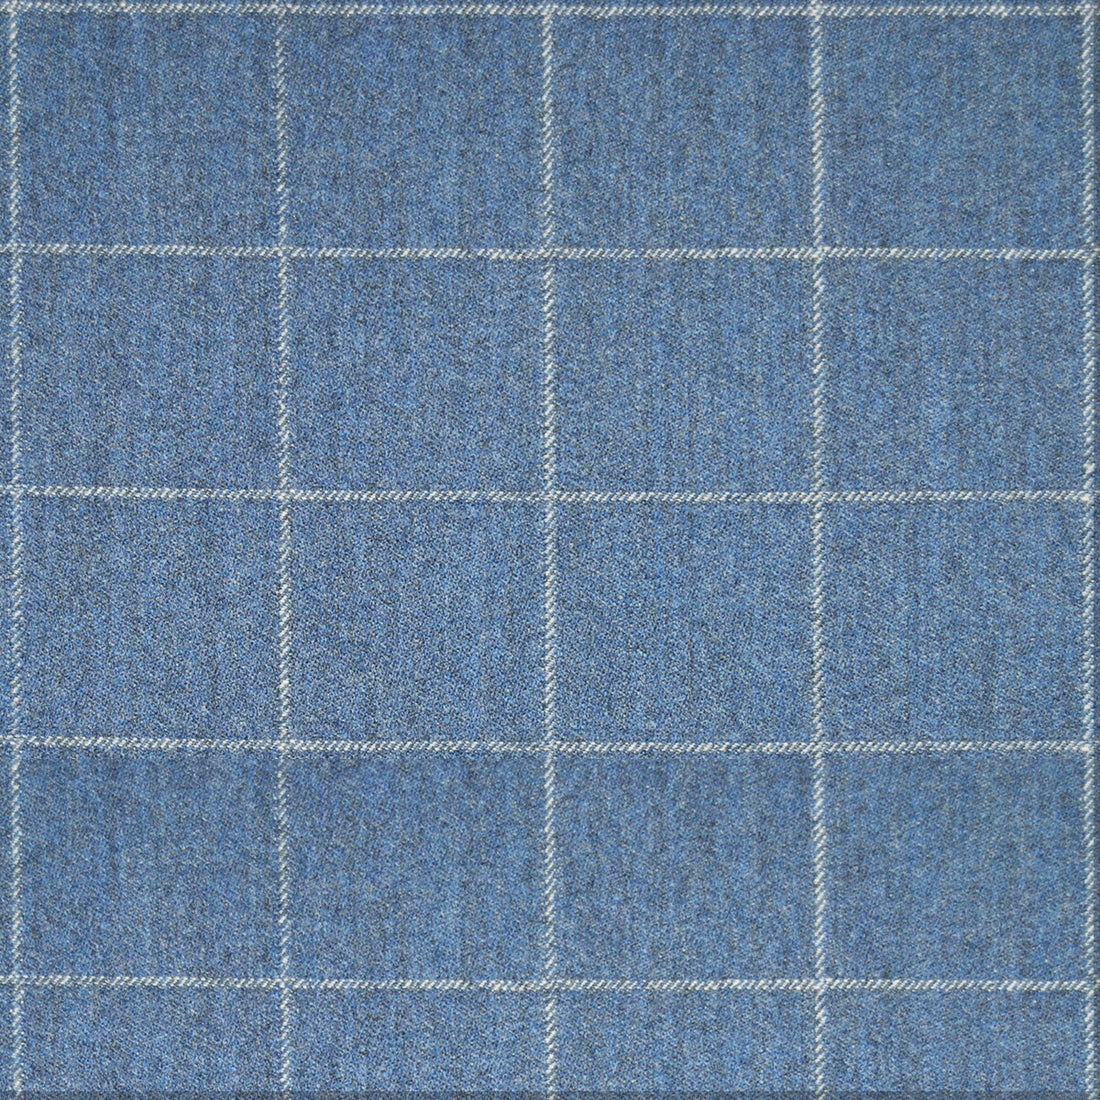 Rascafria fabric in azul color - pattern LCT5459.004.0 - by Gaston y Daniela in the Lorenzo Castillo IV collection